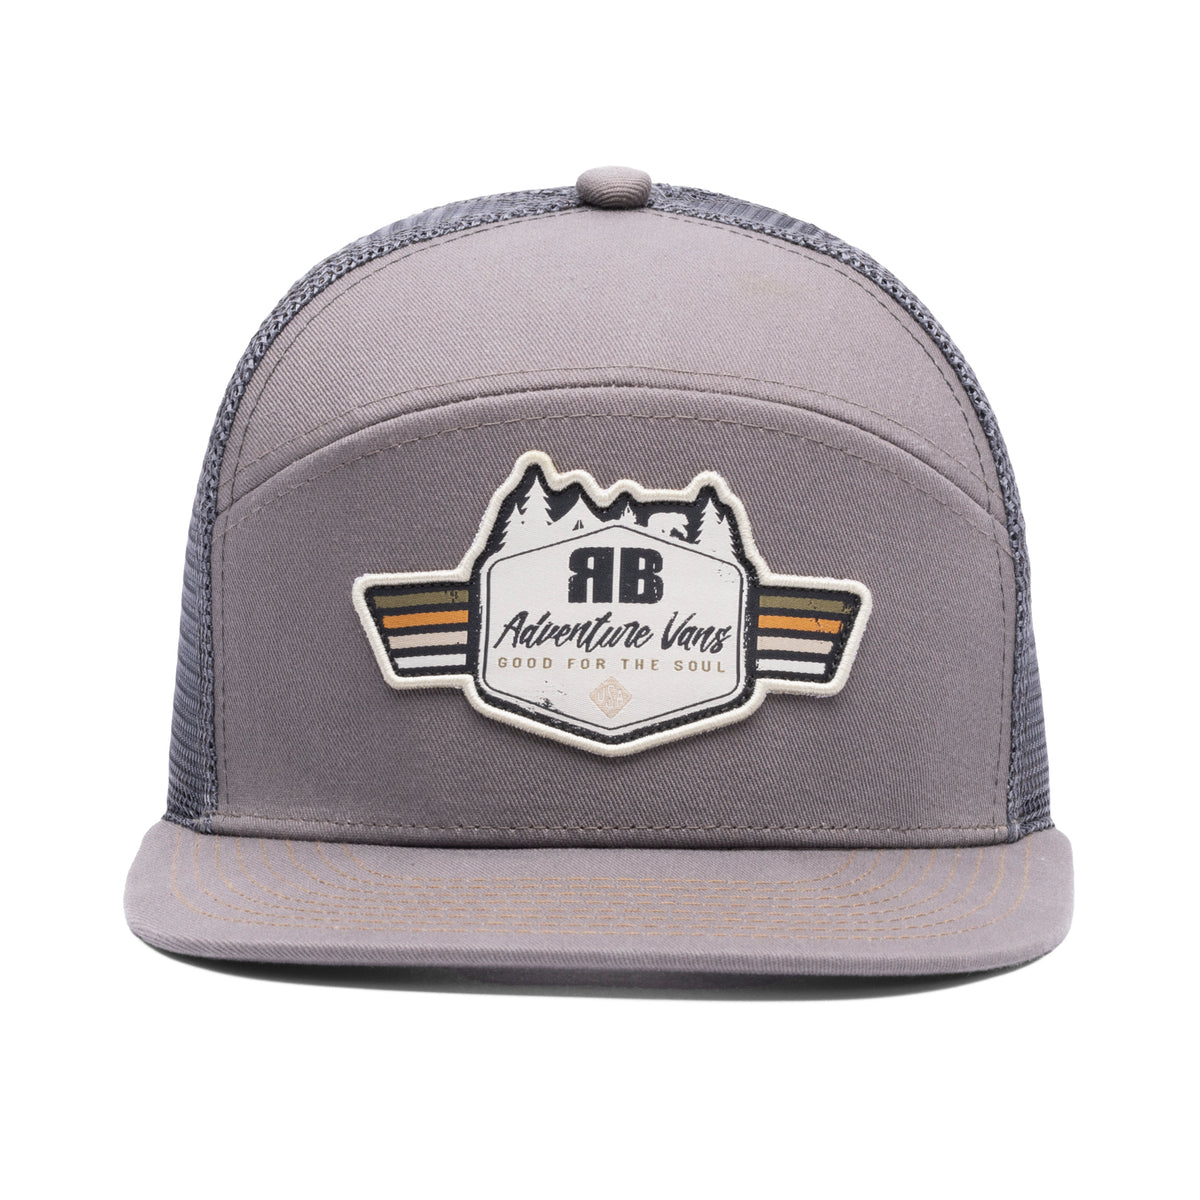 RB Hat - Adventure Van - Charcoal - Mesh Back